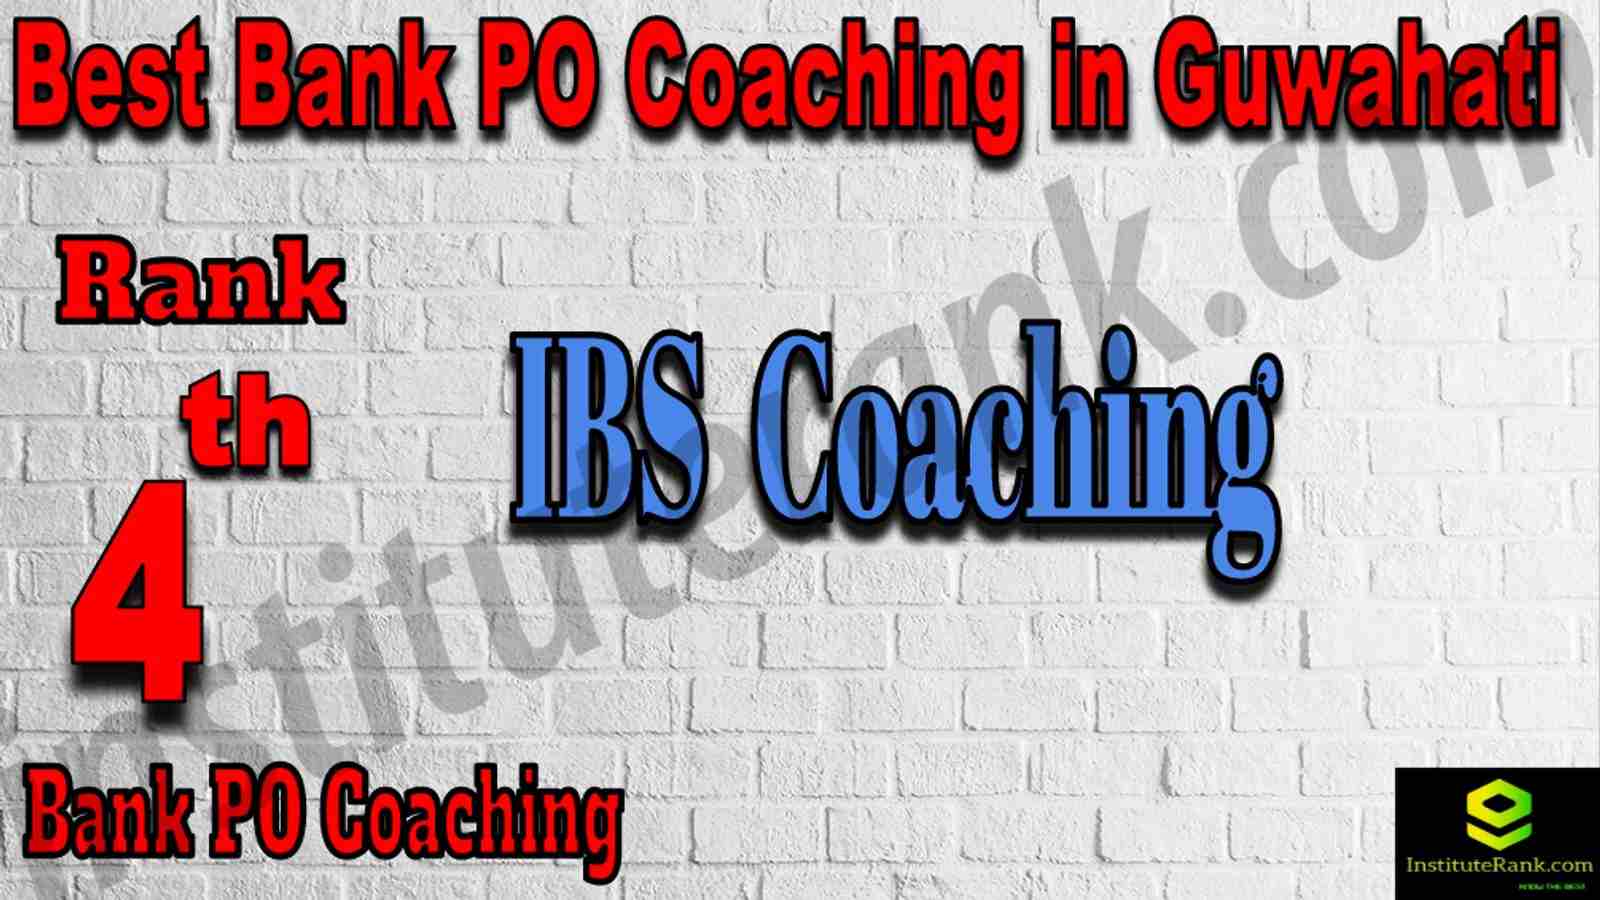 4th Best Bank PO Coaching in Guwahati